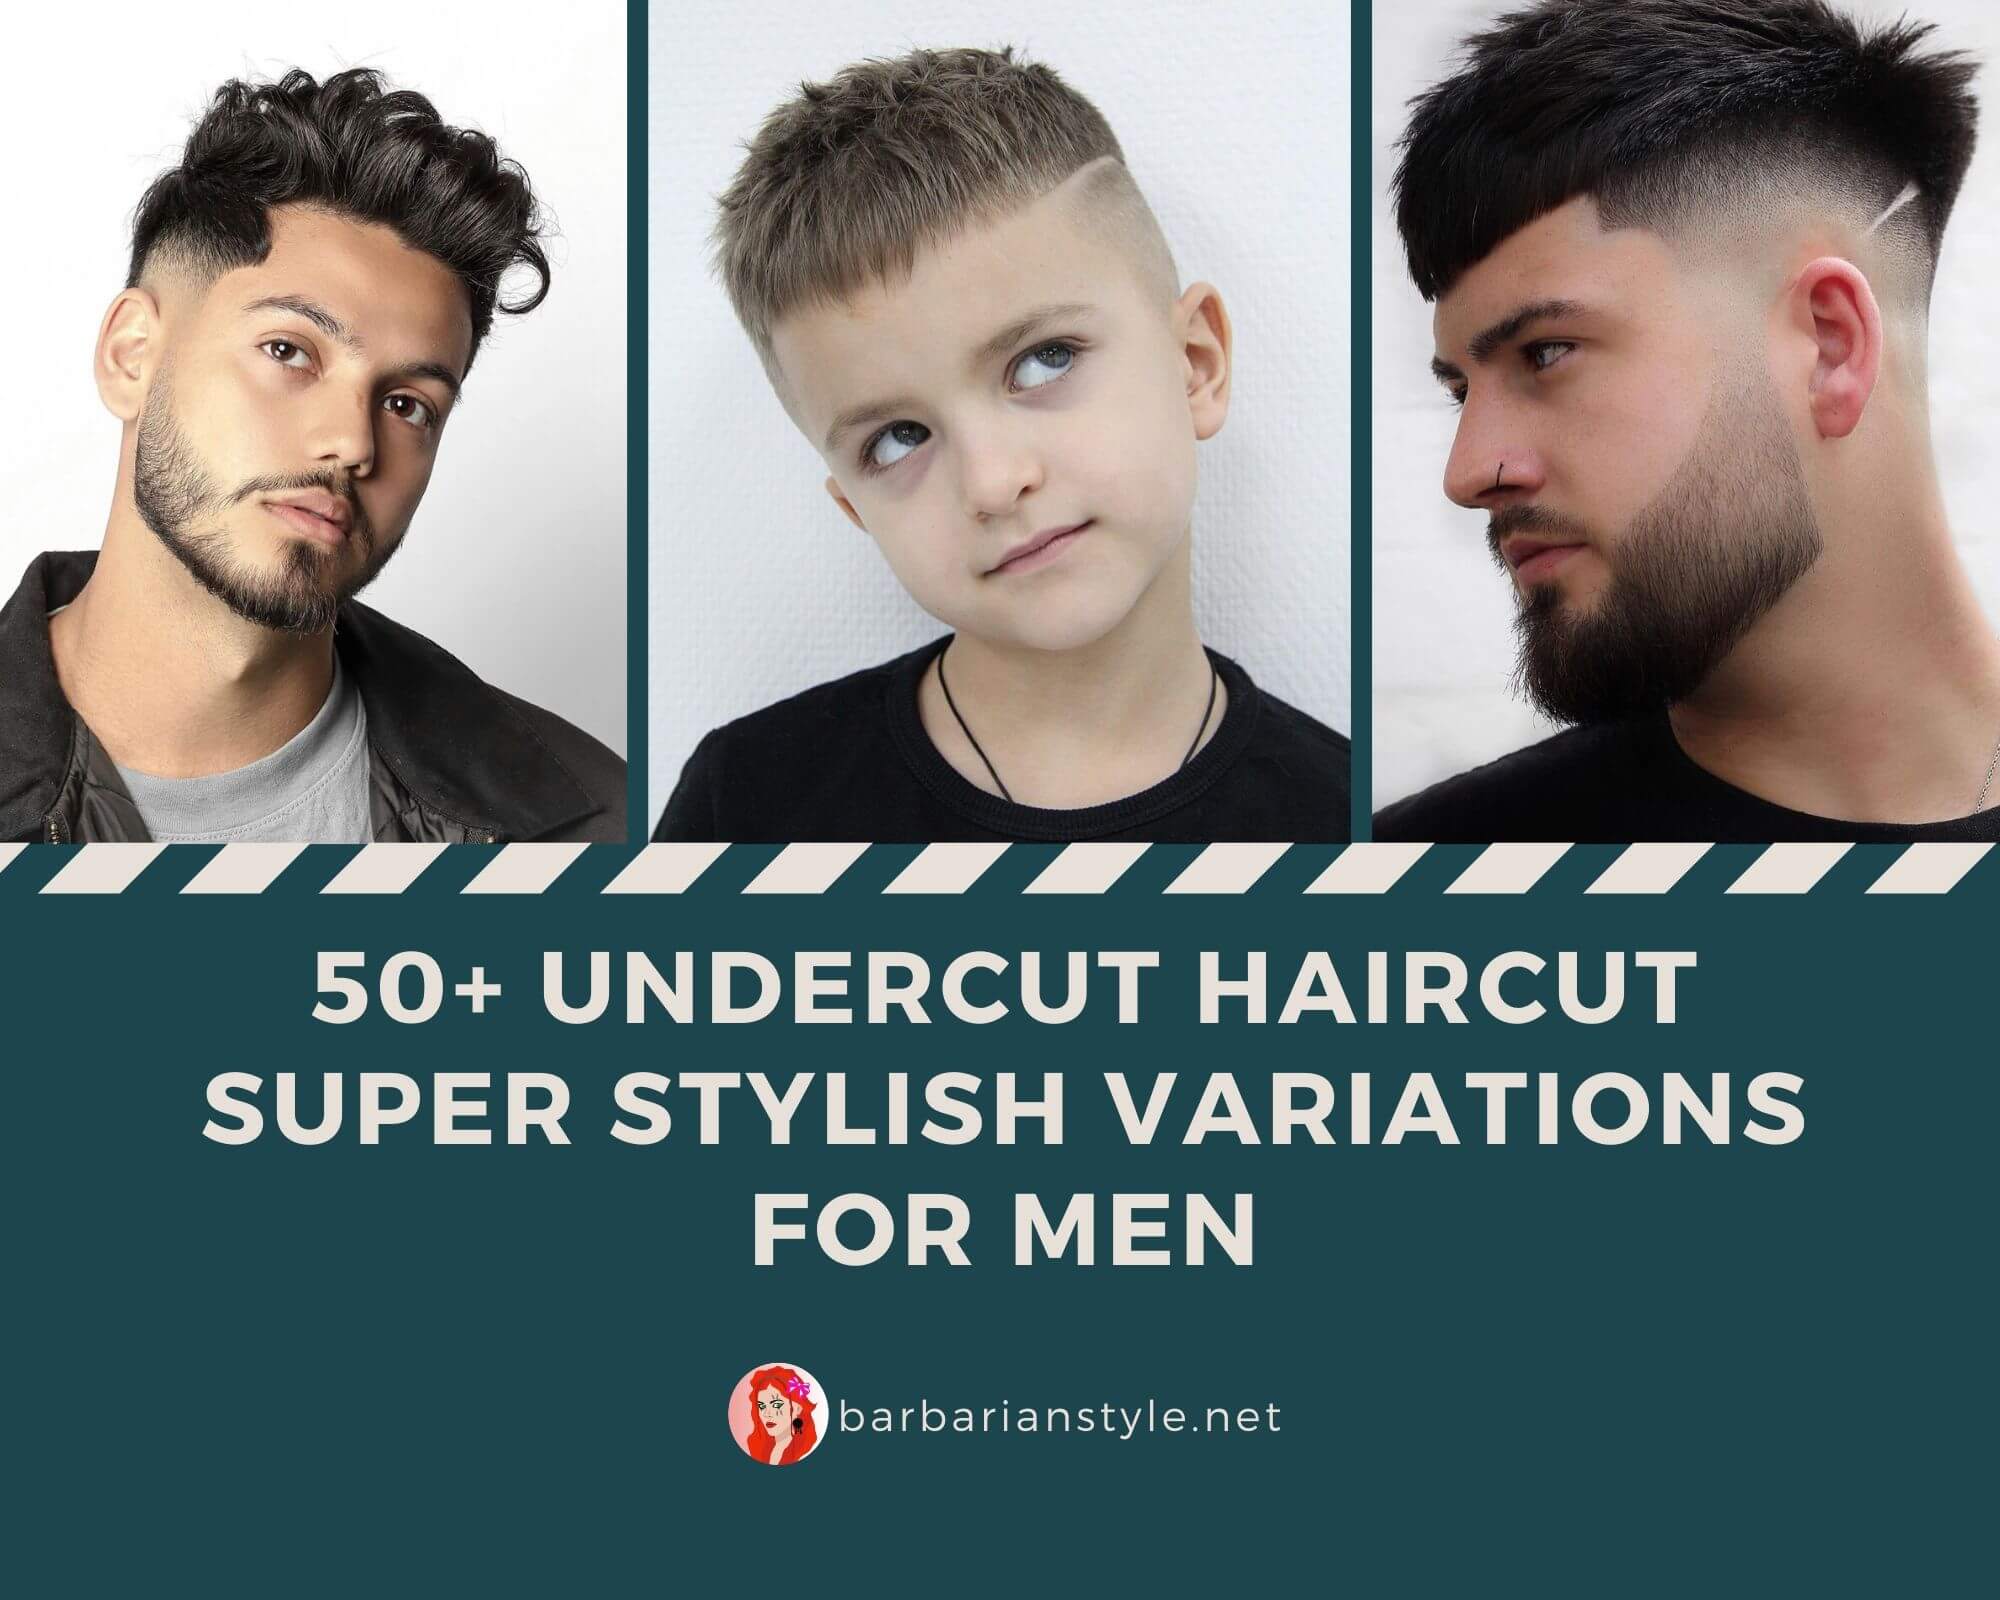 50+ Undercut Haircut Super Stylish Variations for Men